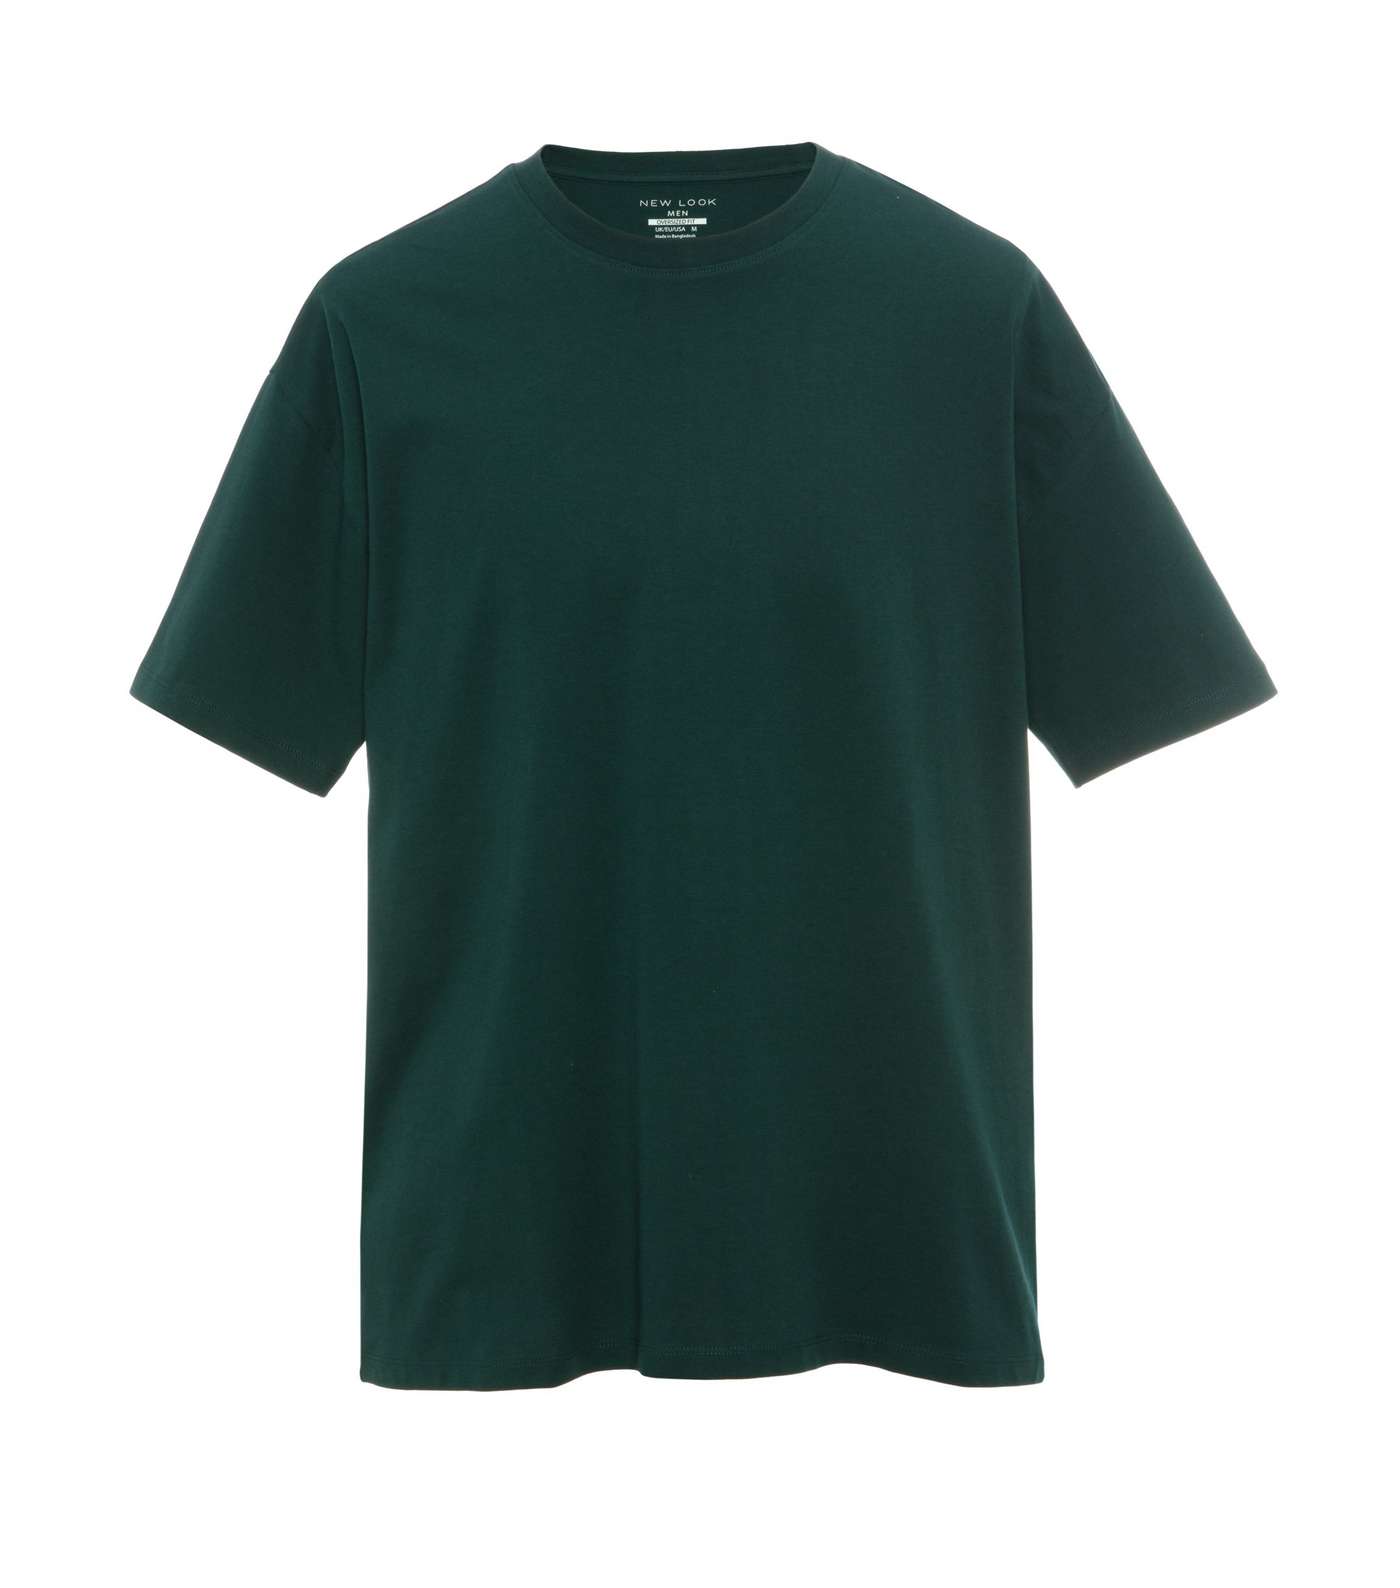 Green Plain Relaxed Fit T-Shirt